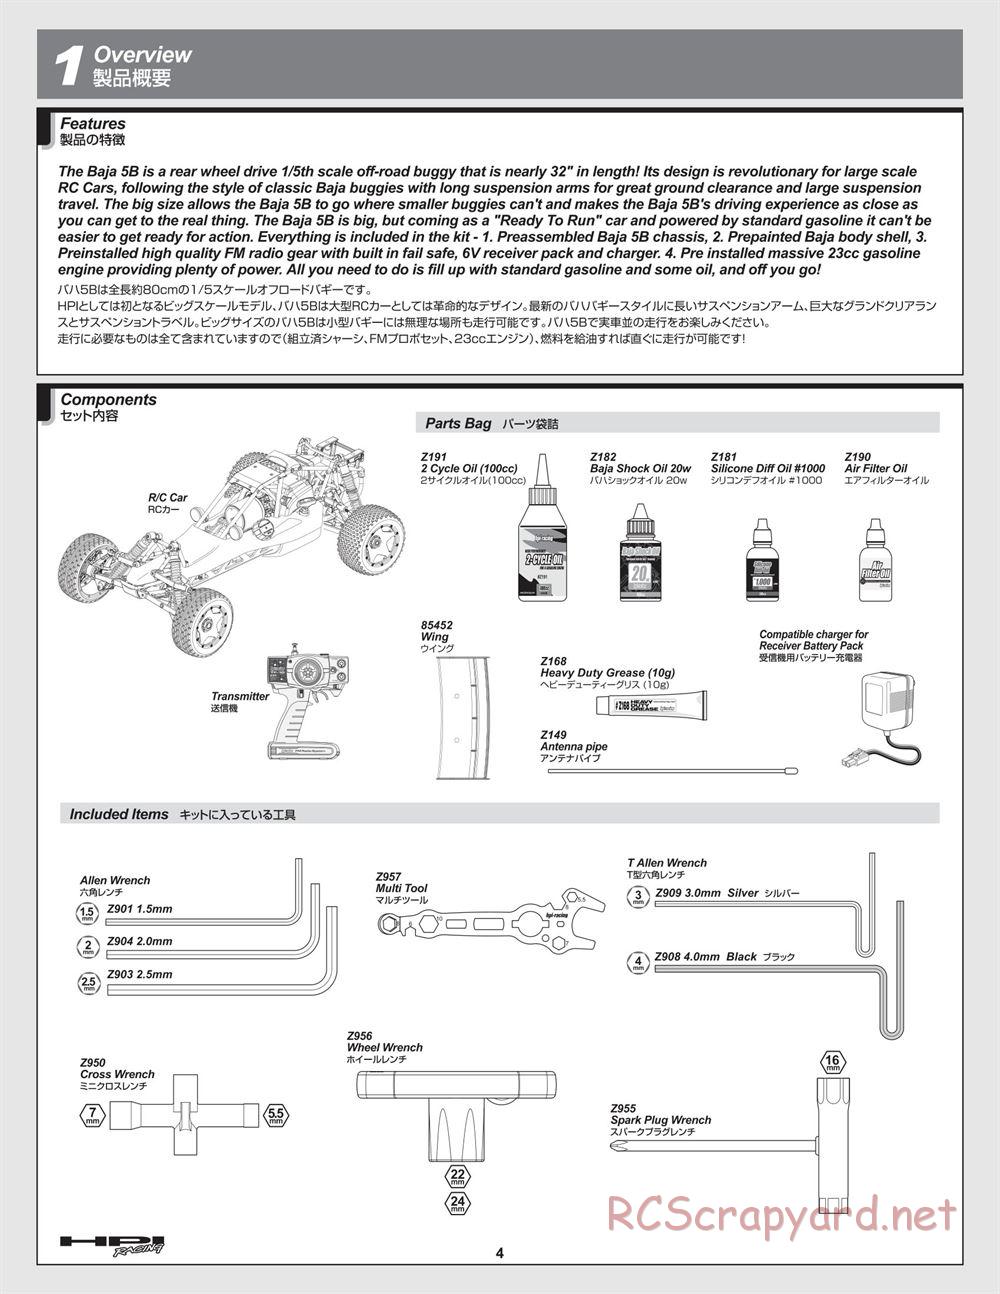 HPI - Baja 5B - Manual - Page 4